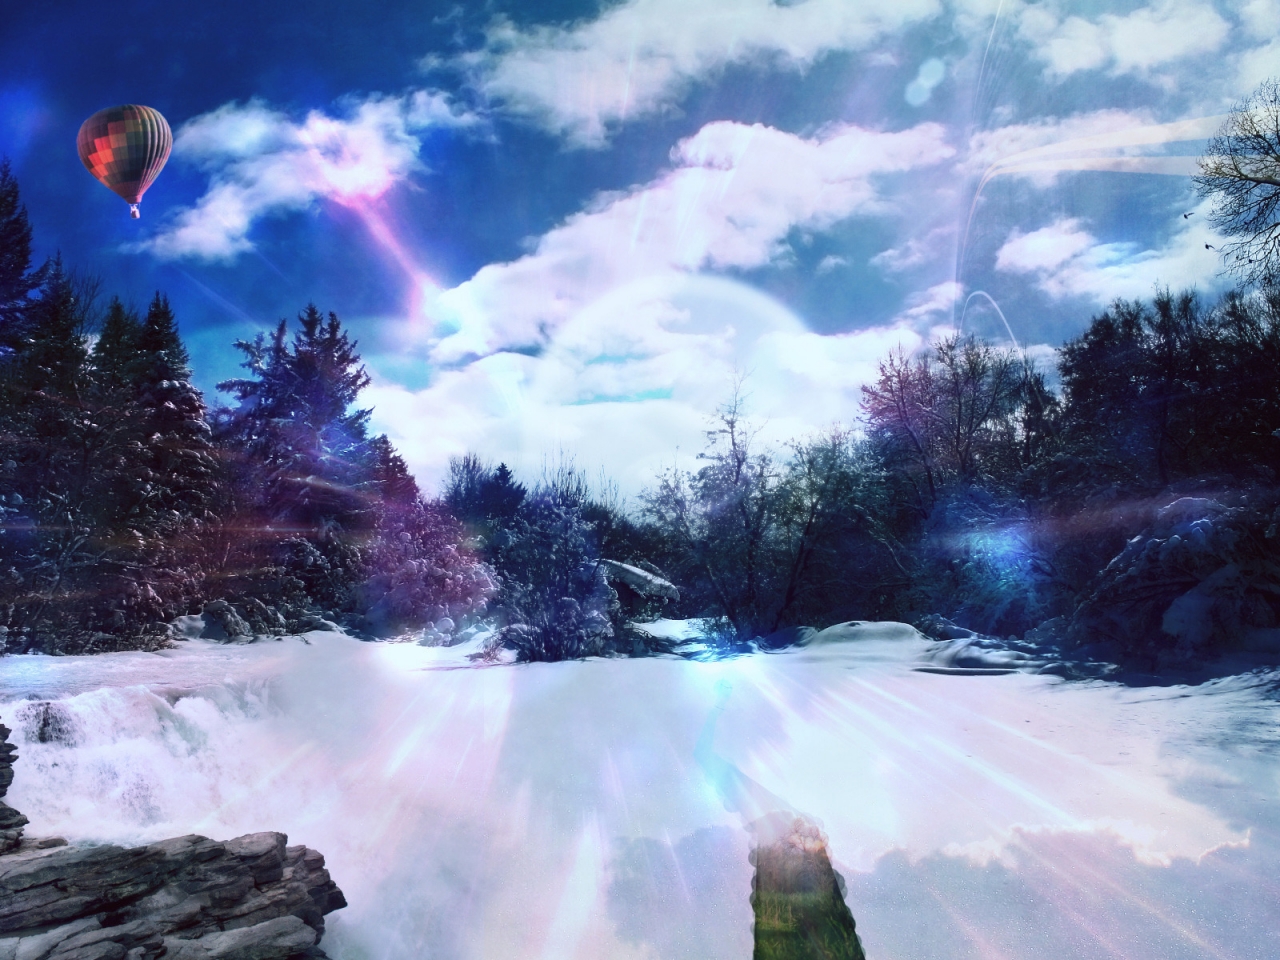 Snowy Dream for 1280 x 960 resolution